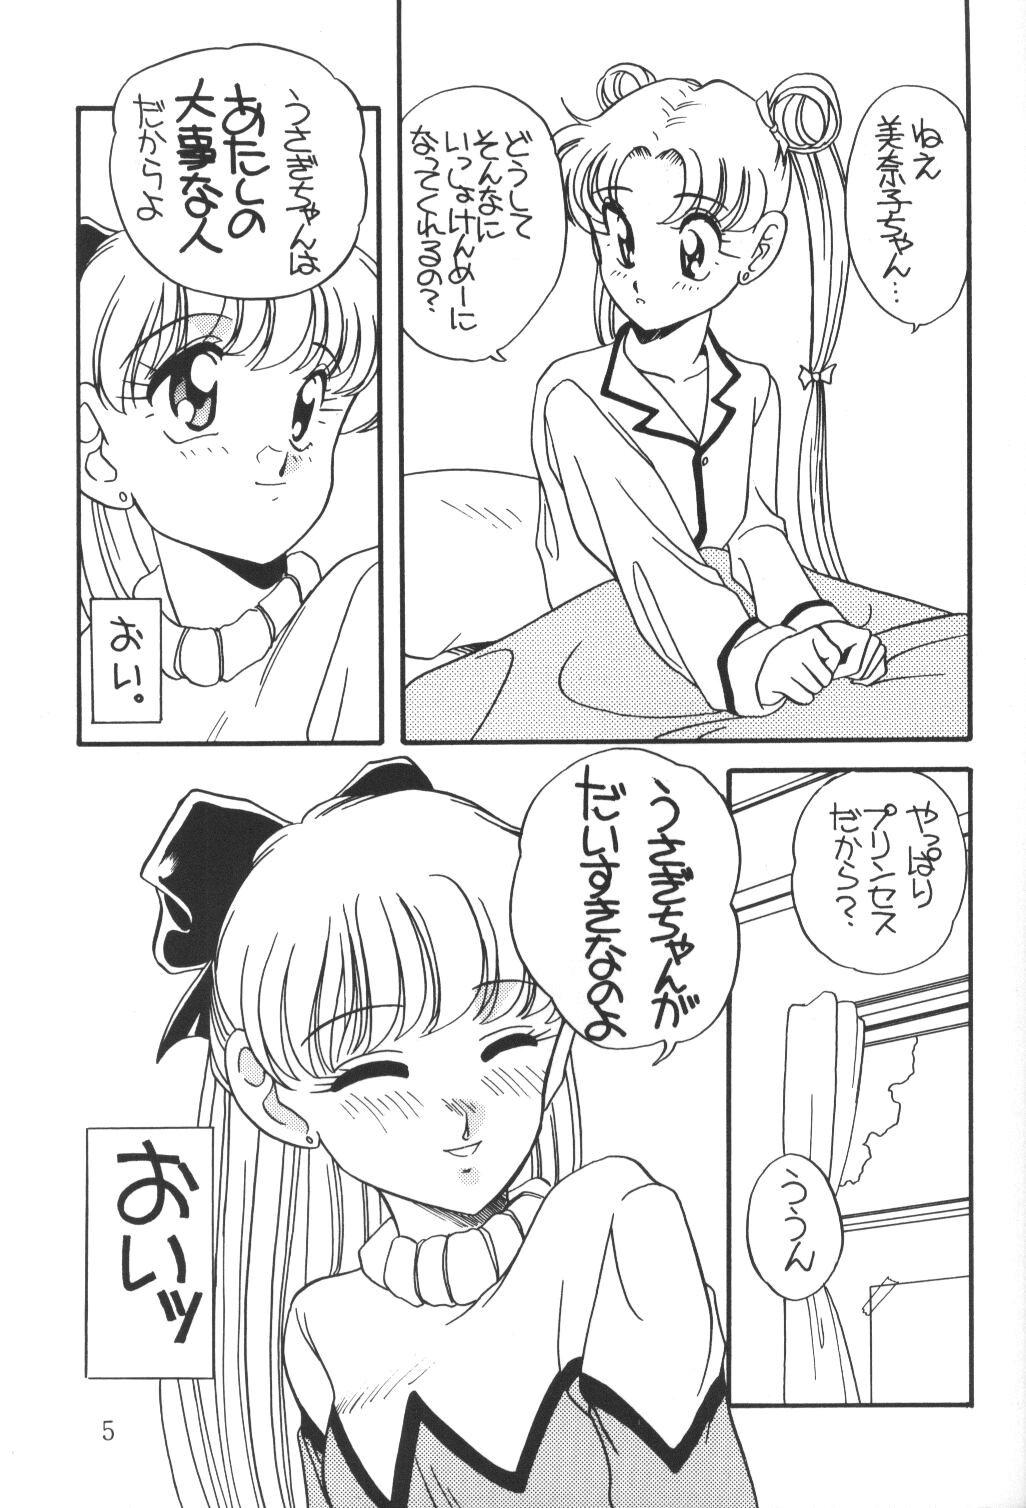 Chicks Elfin 9 - Sailor moon Threesome - Page 4